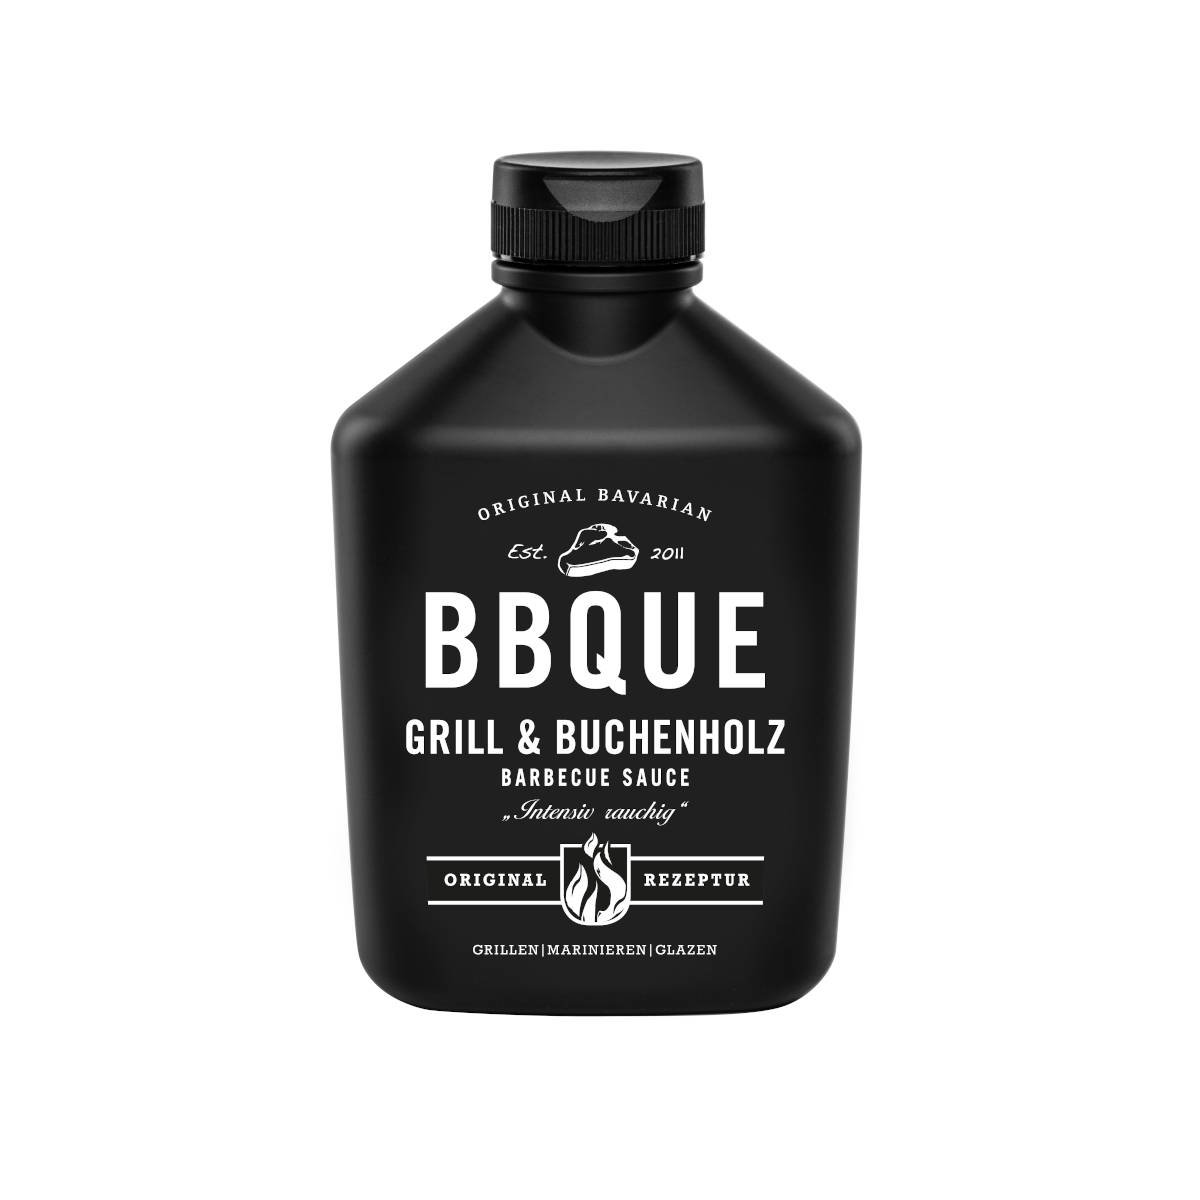 BBQUE Grill & Buchenholz